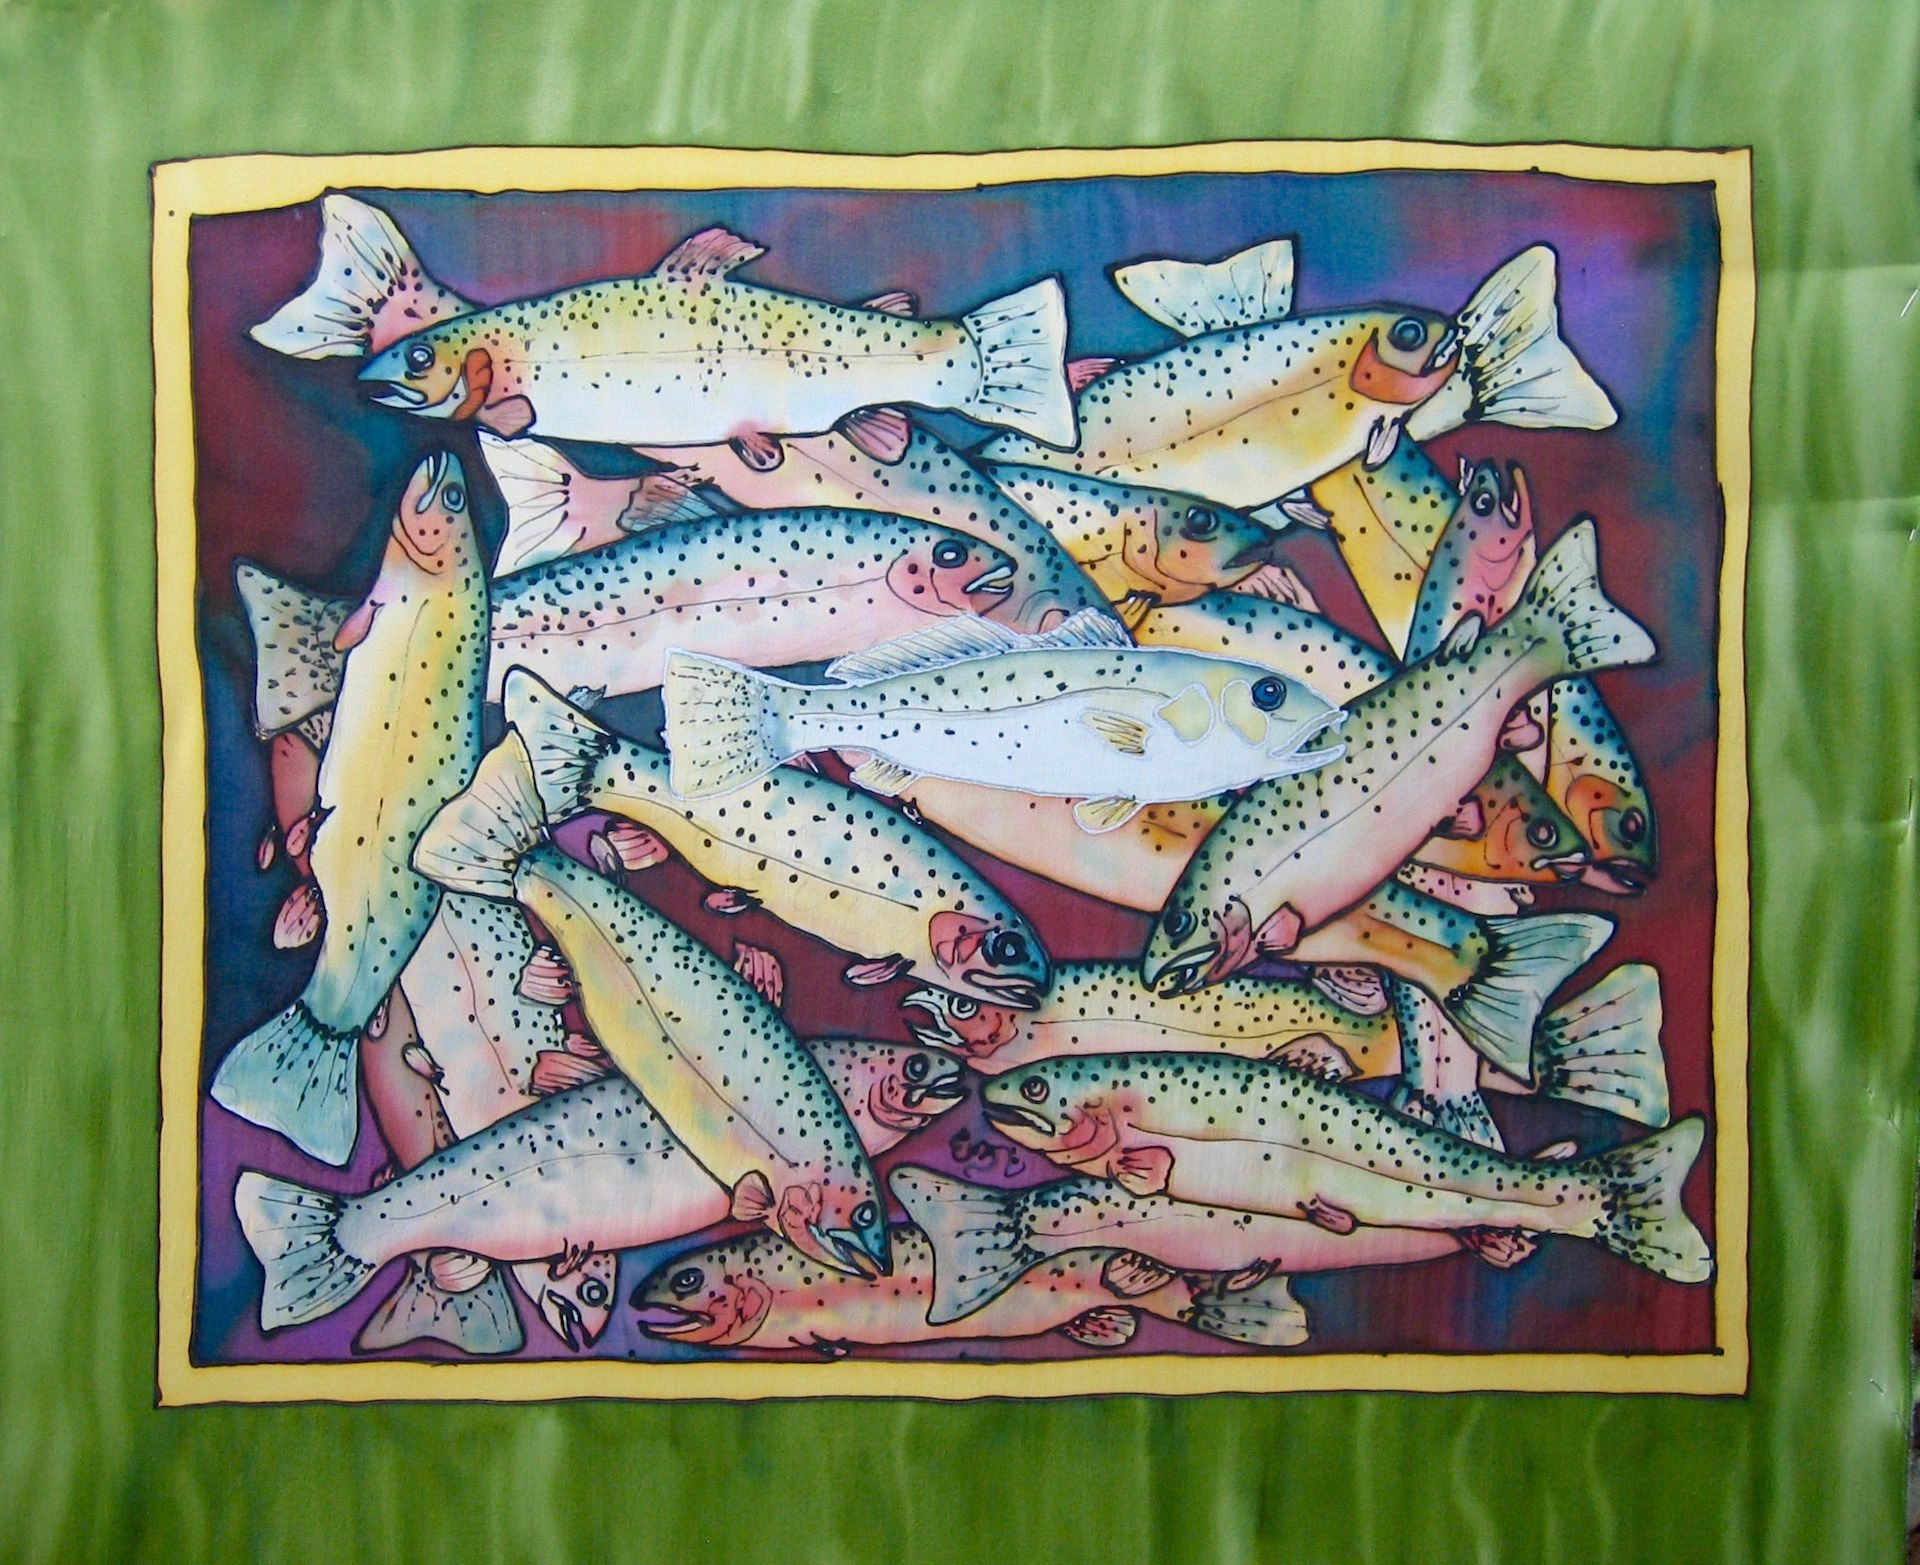 fishing planet rainbow trout colorado